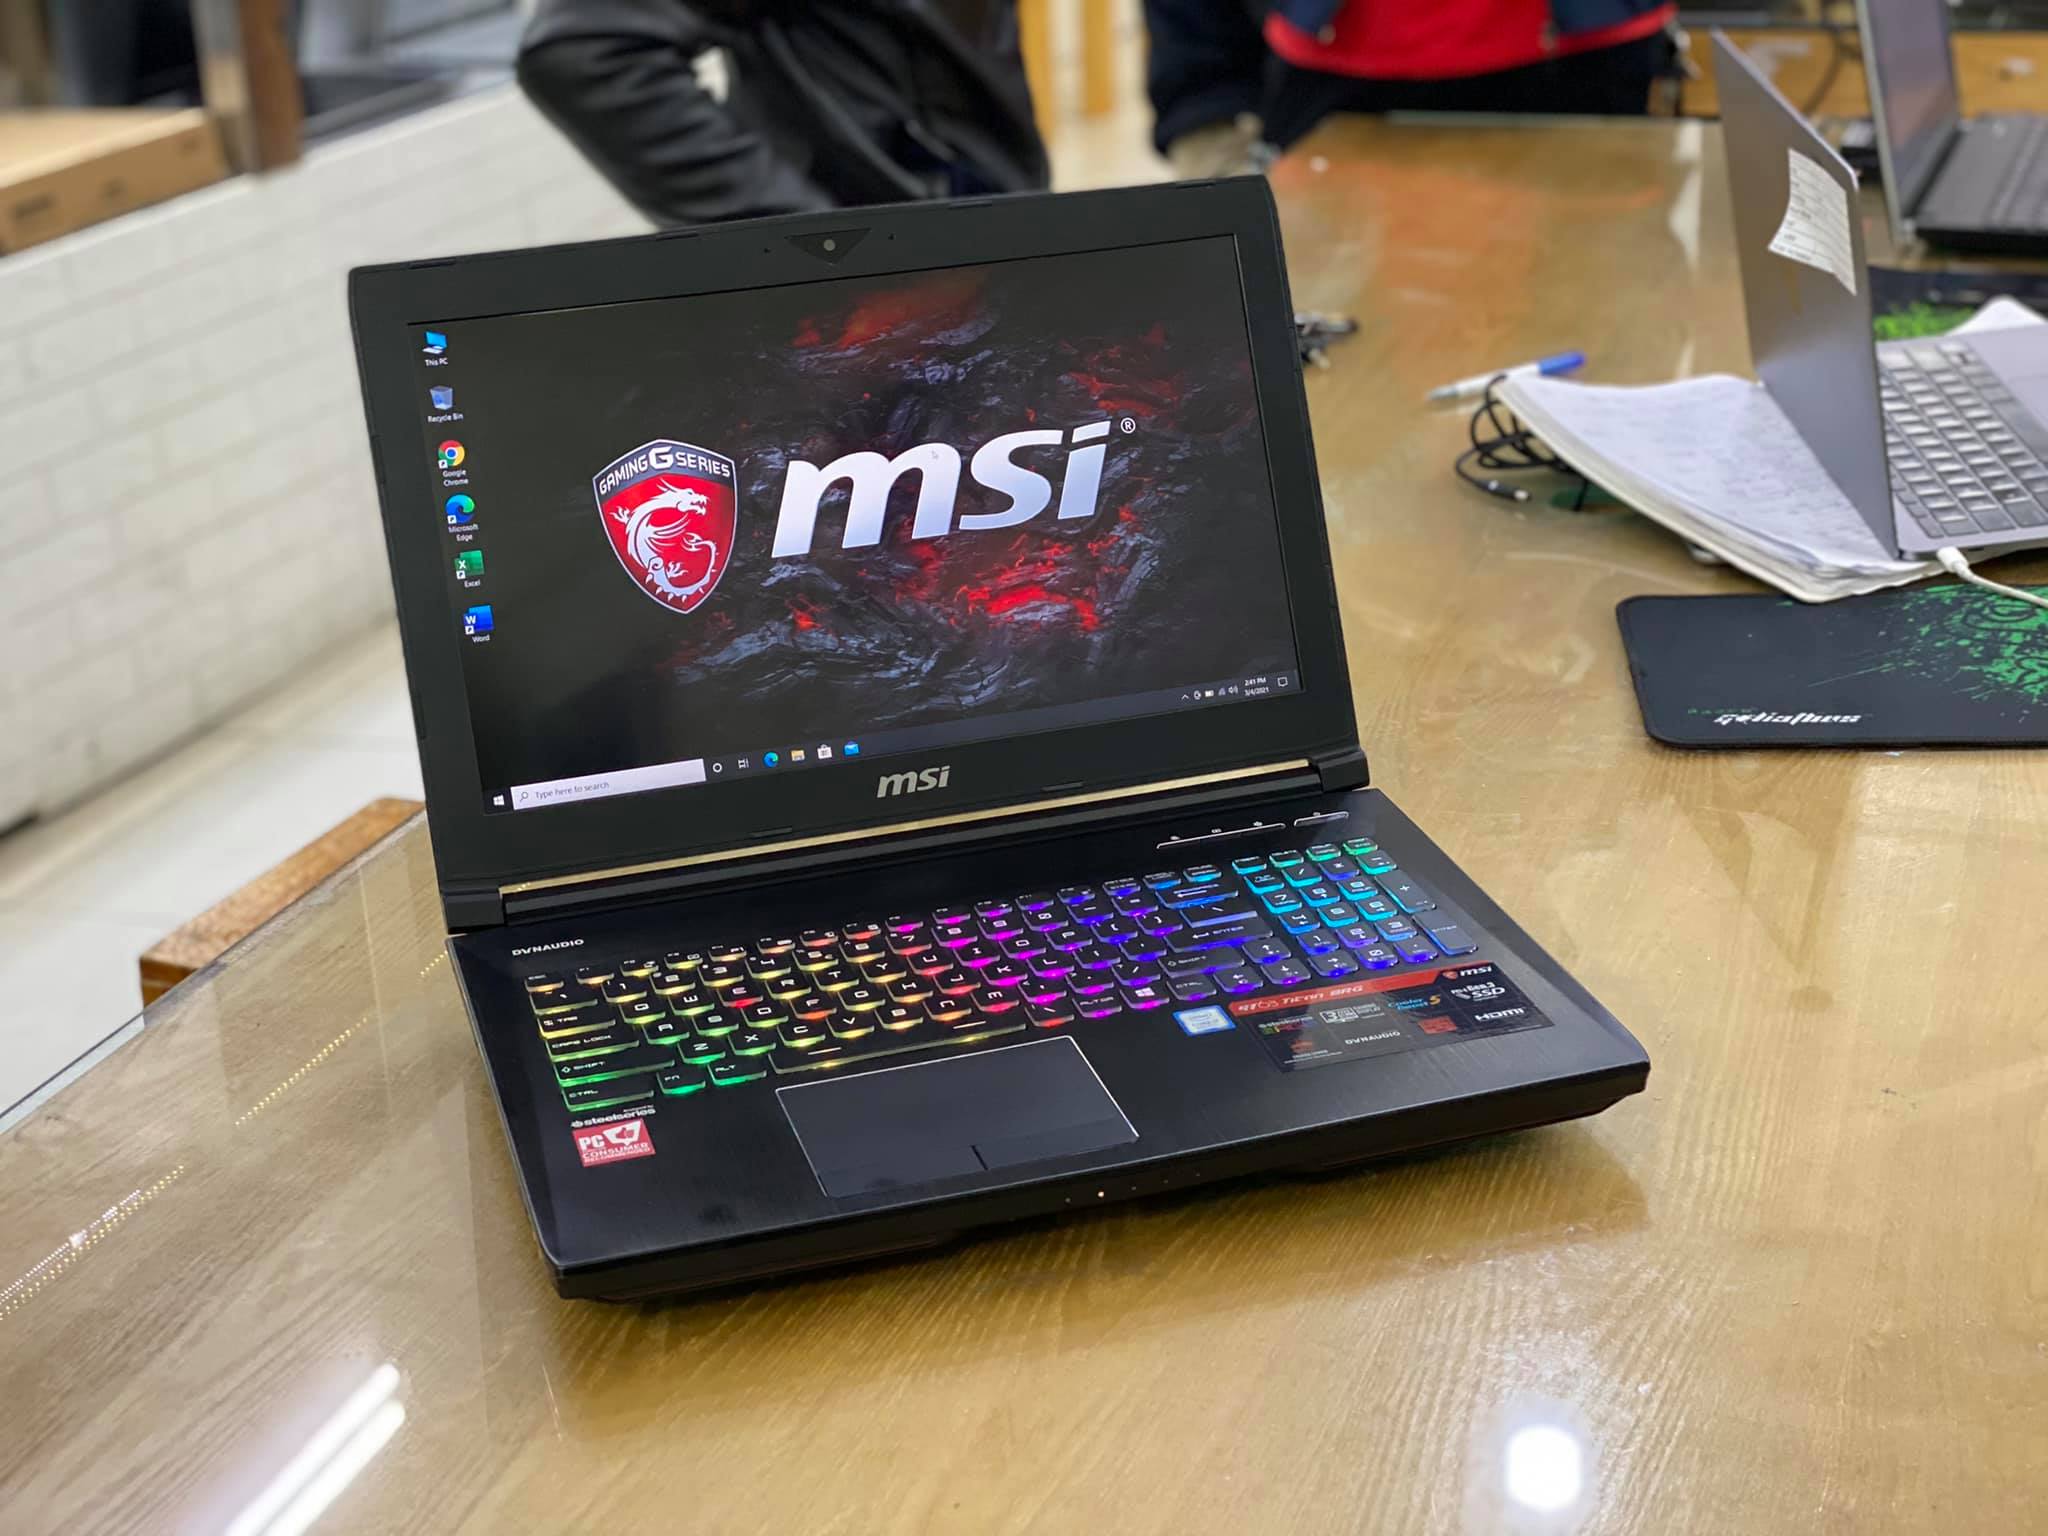 Laptop MSI GT63 titan 8RG.jpg